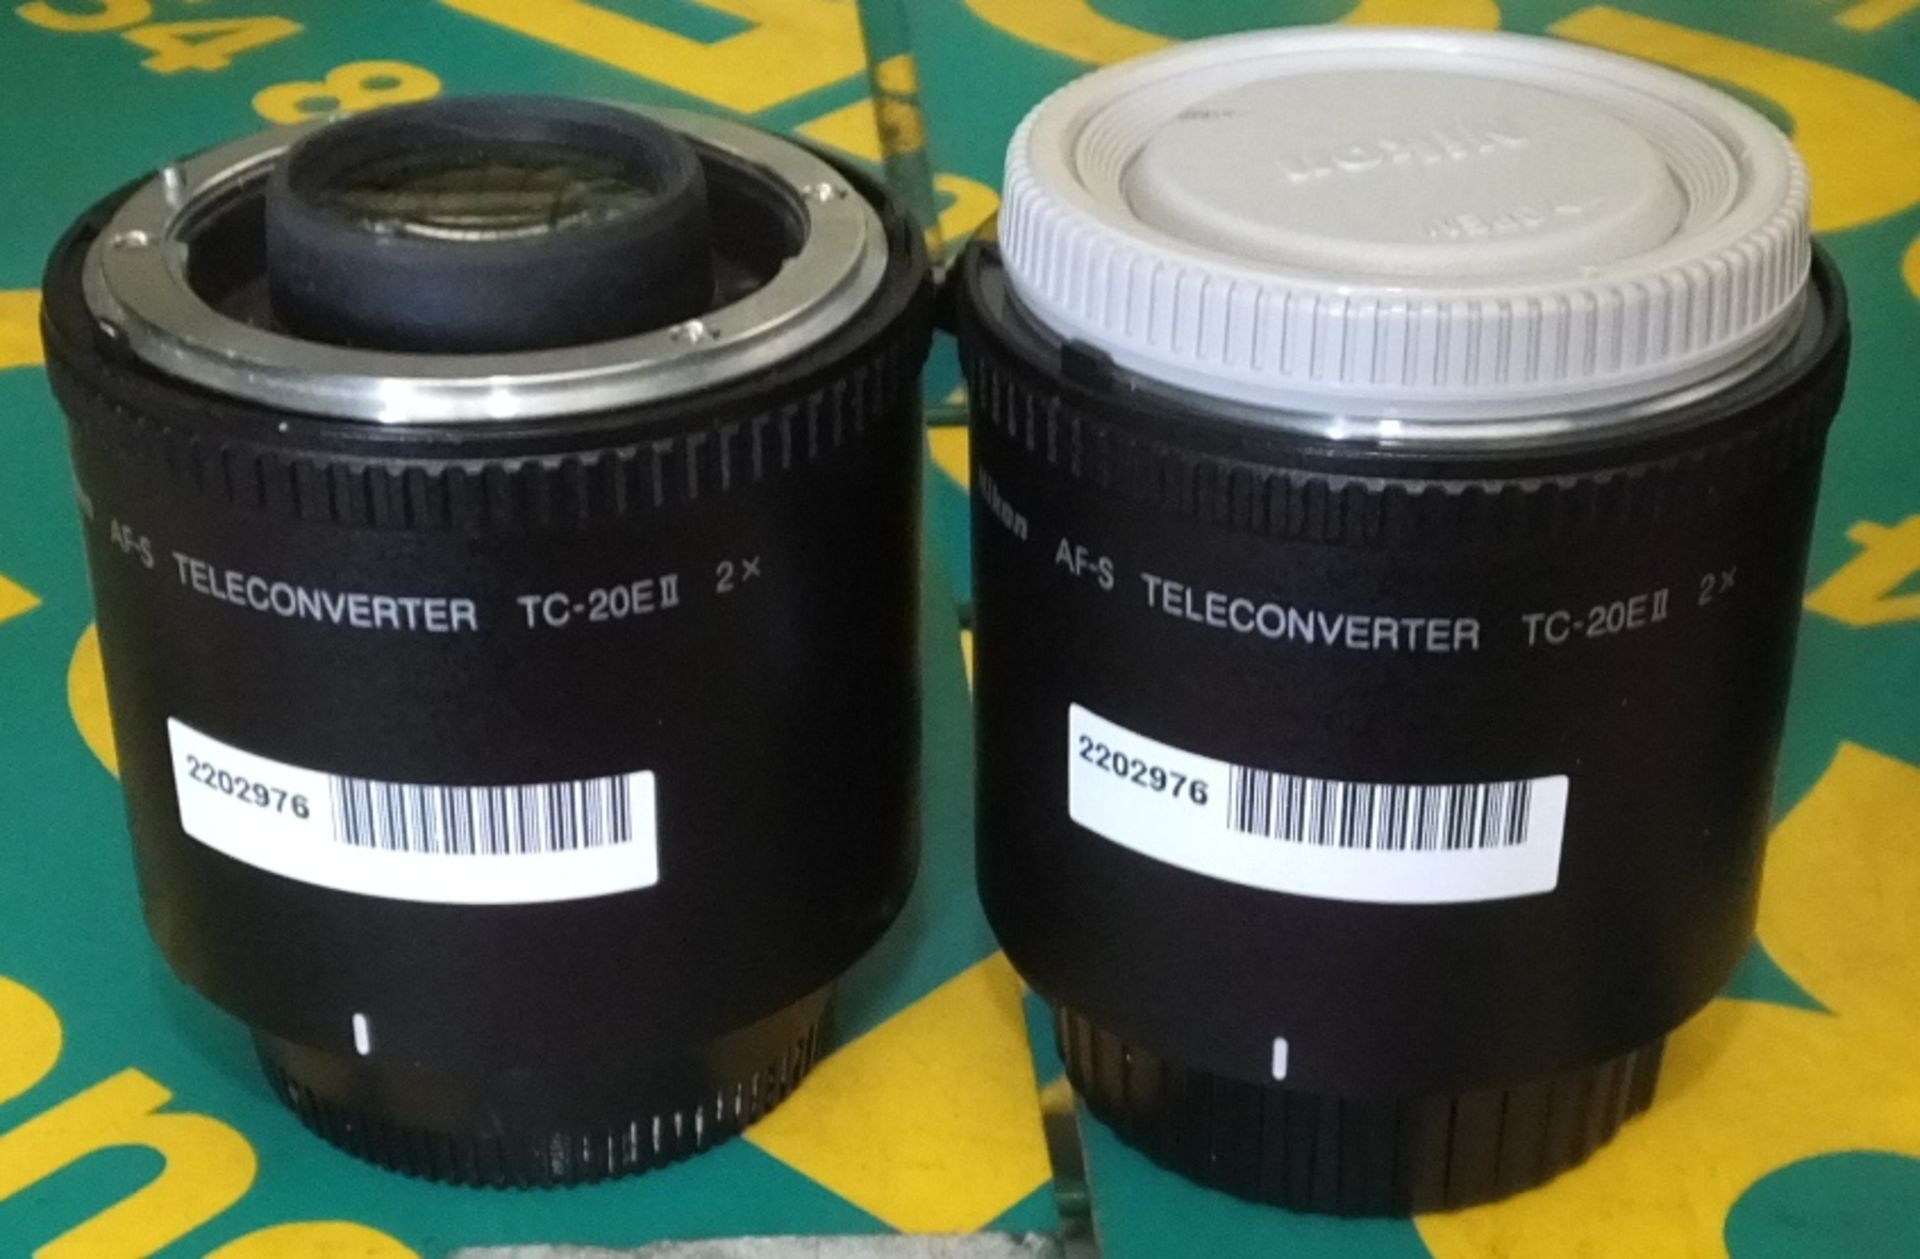 2x Nikon AF-S Teleconvertor TC-20E II 2x